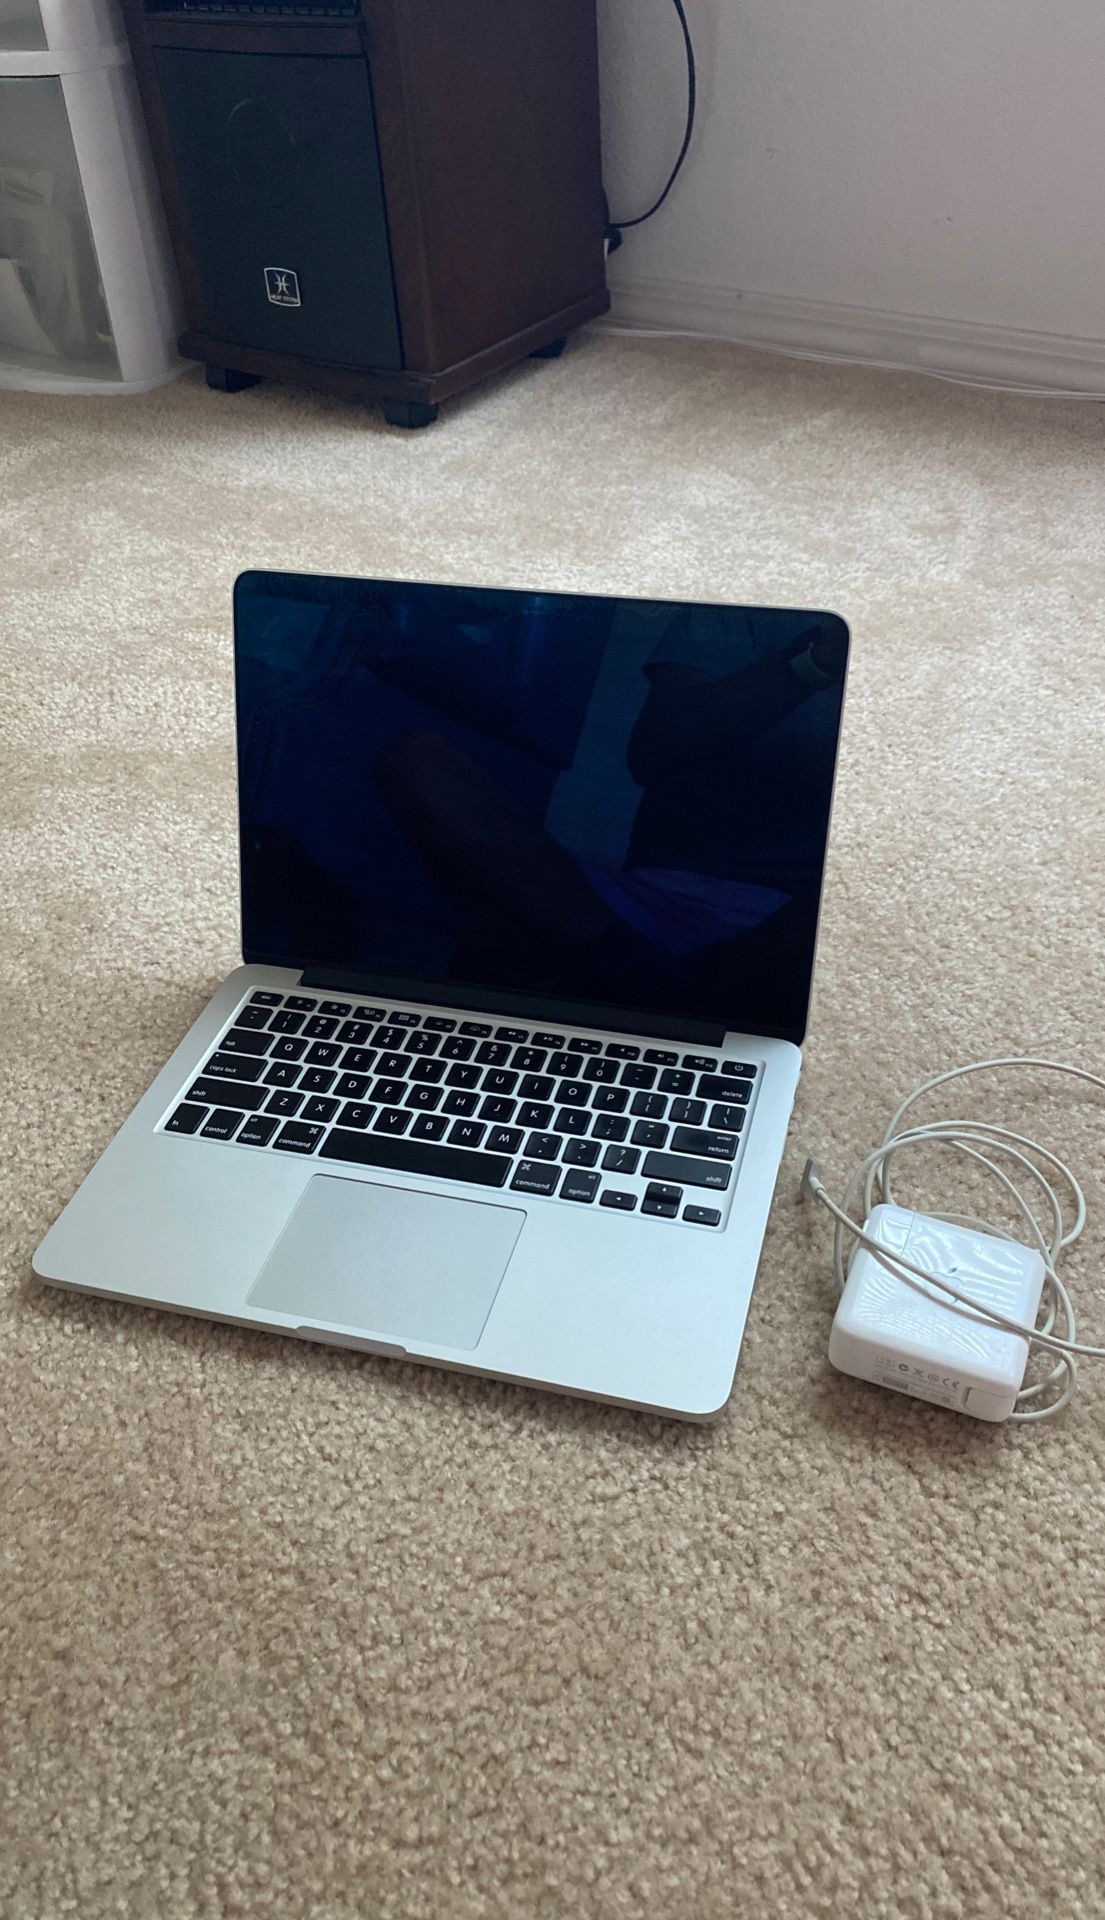 13 inch MacBook Pro Retina (2.4Ghz i5) late 2013 model